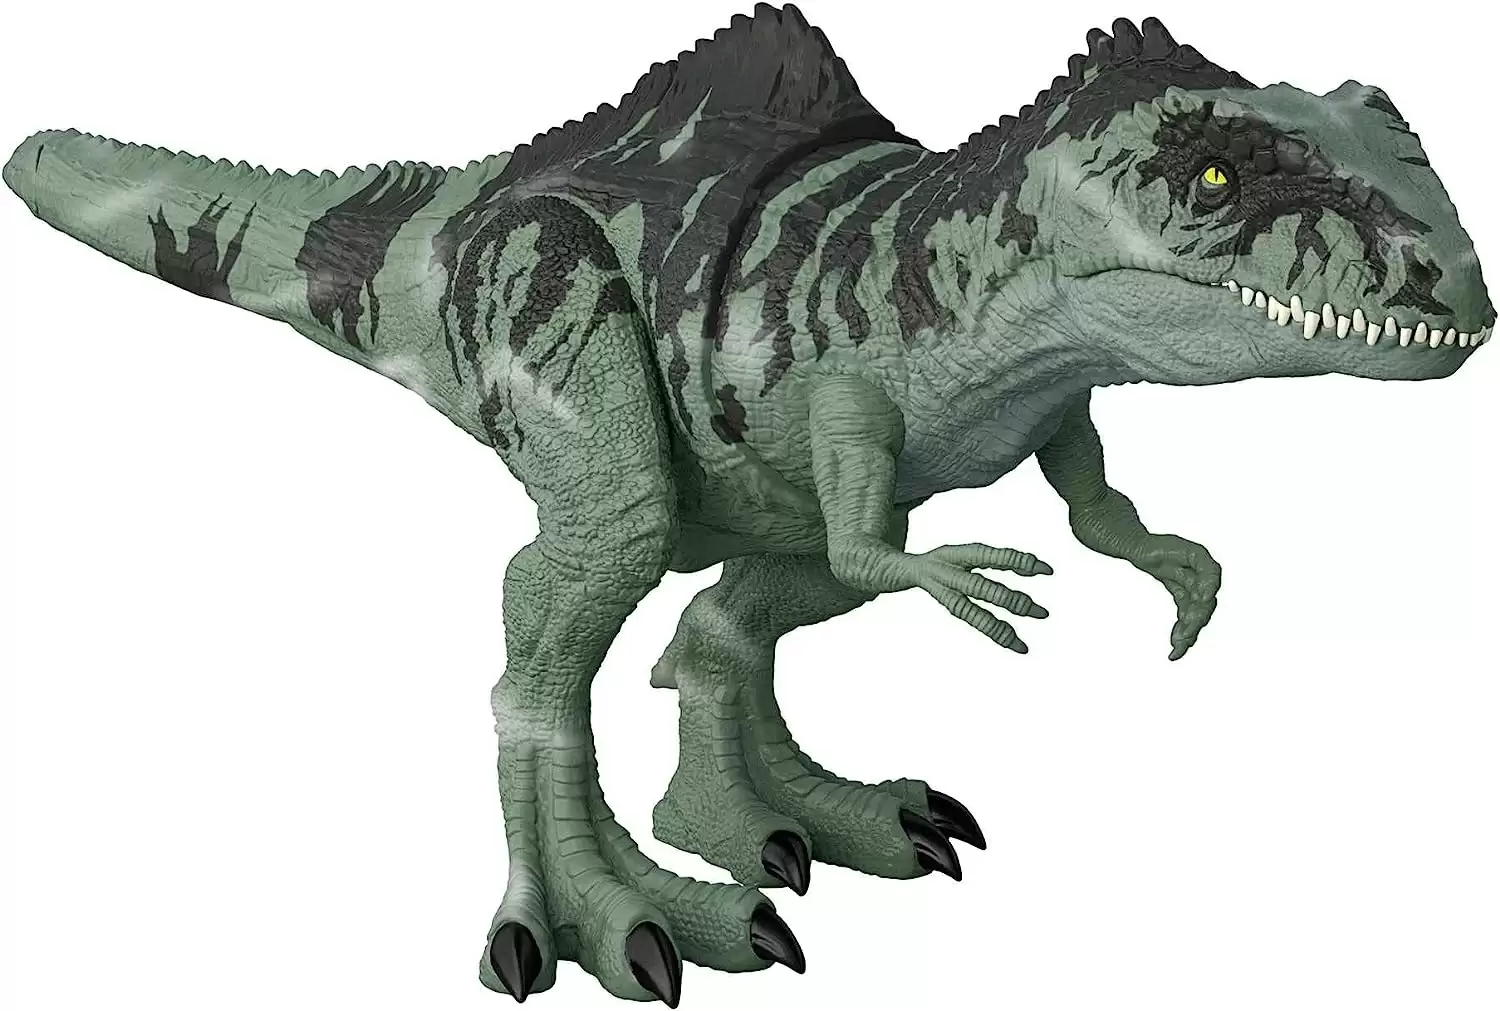 Jurassic World Kükreyen Dev Dinozor Figürü, GYC94